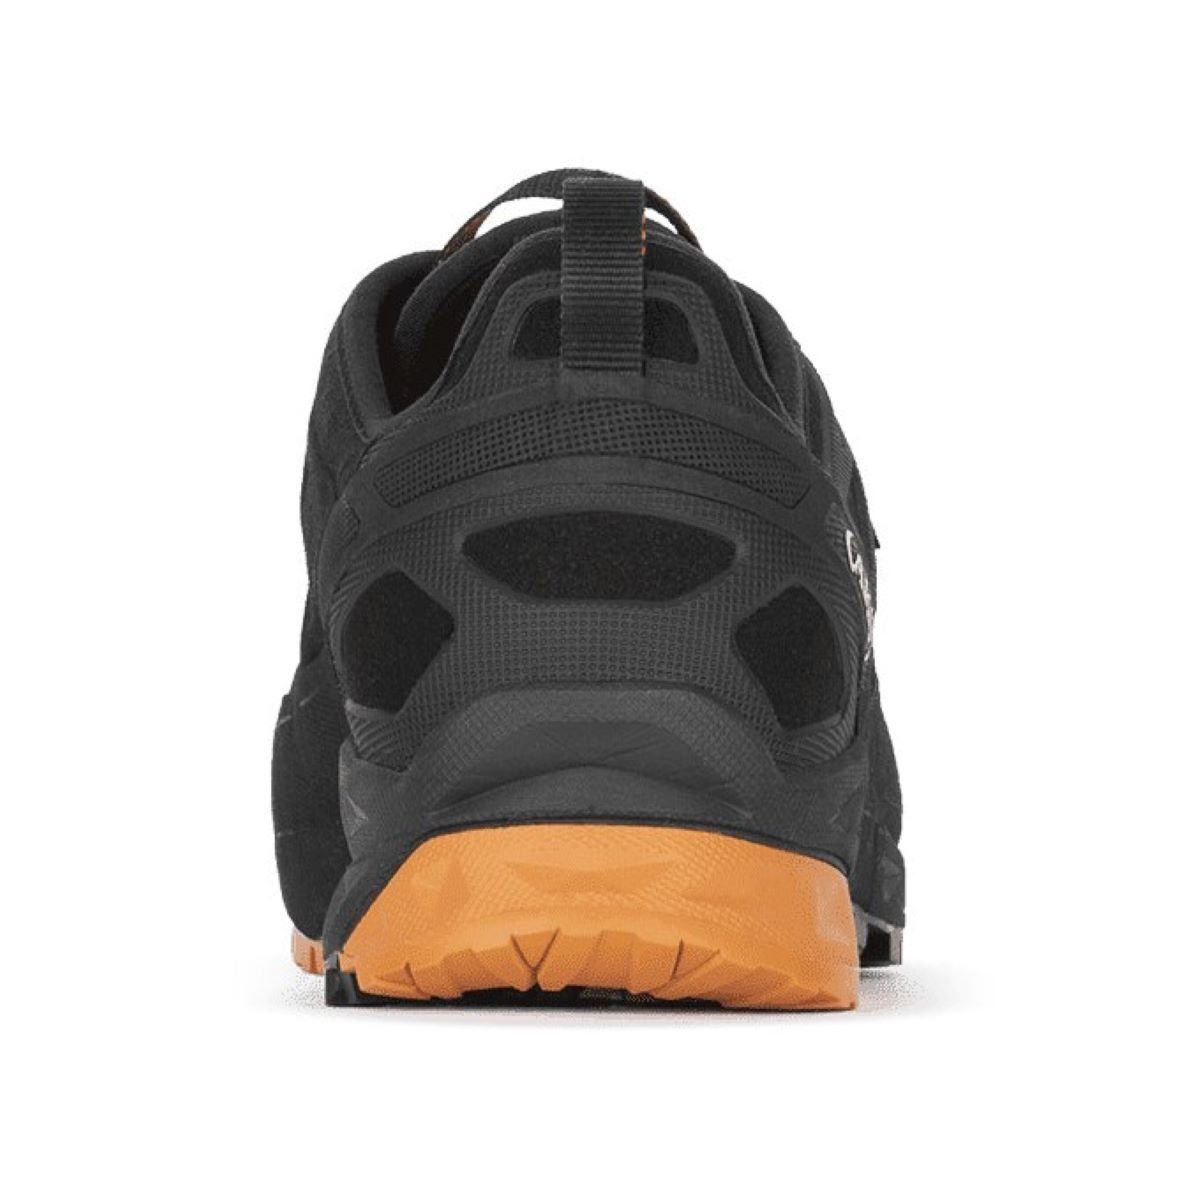 Topánky AKU Rock Dfs GTX M - čierna/oranžová